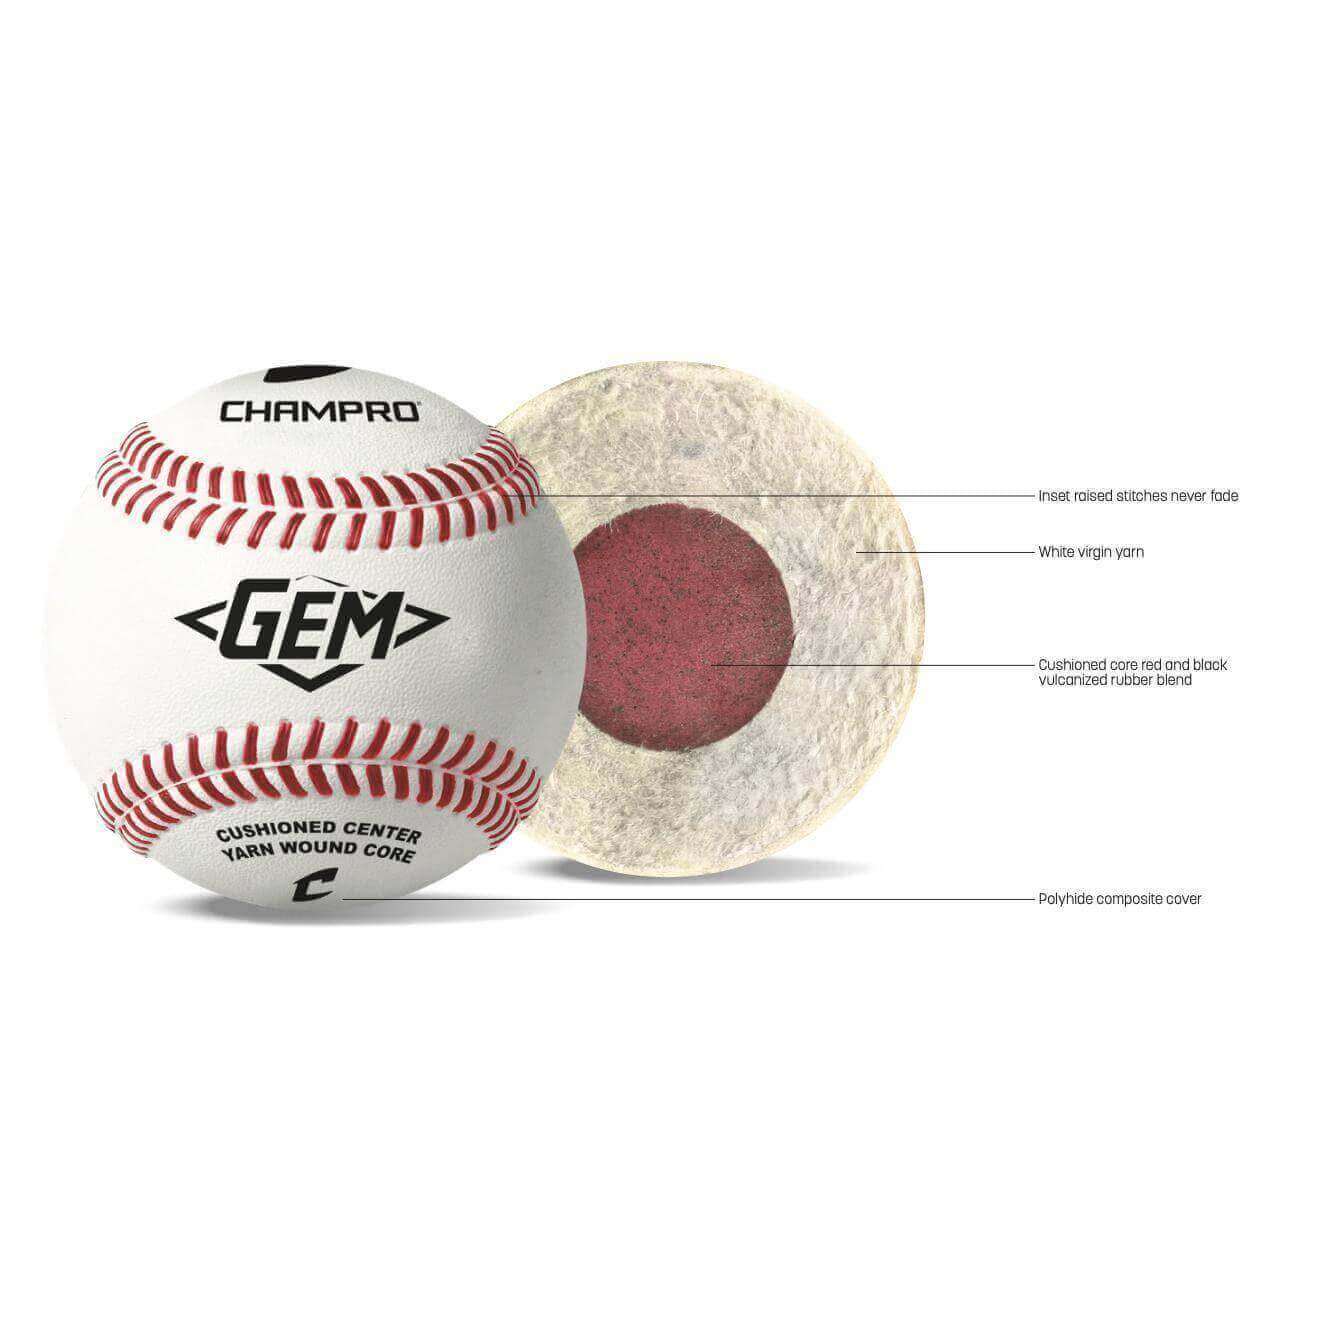 Champro Gem Ball Pitching Machine Baseballs (1 Dozen)